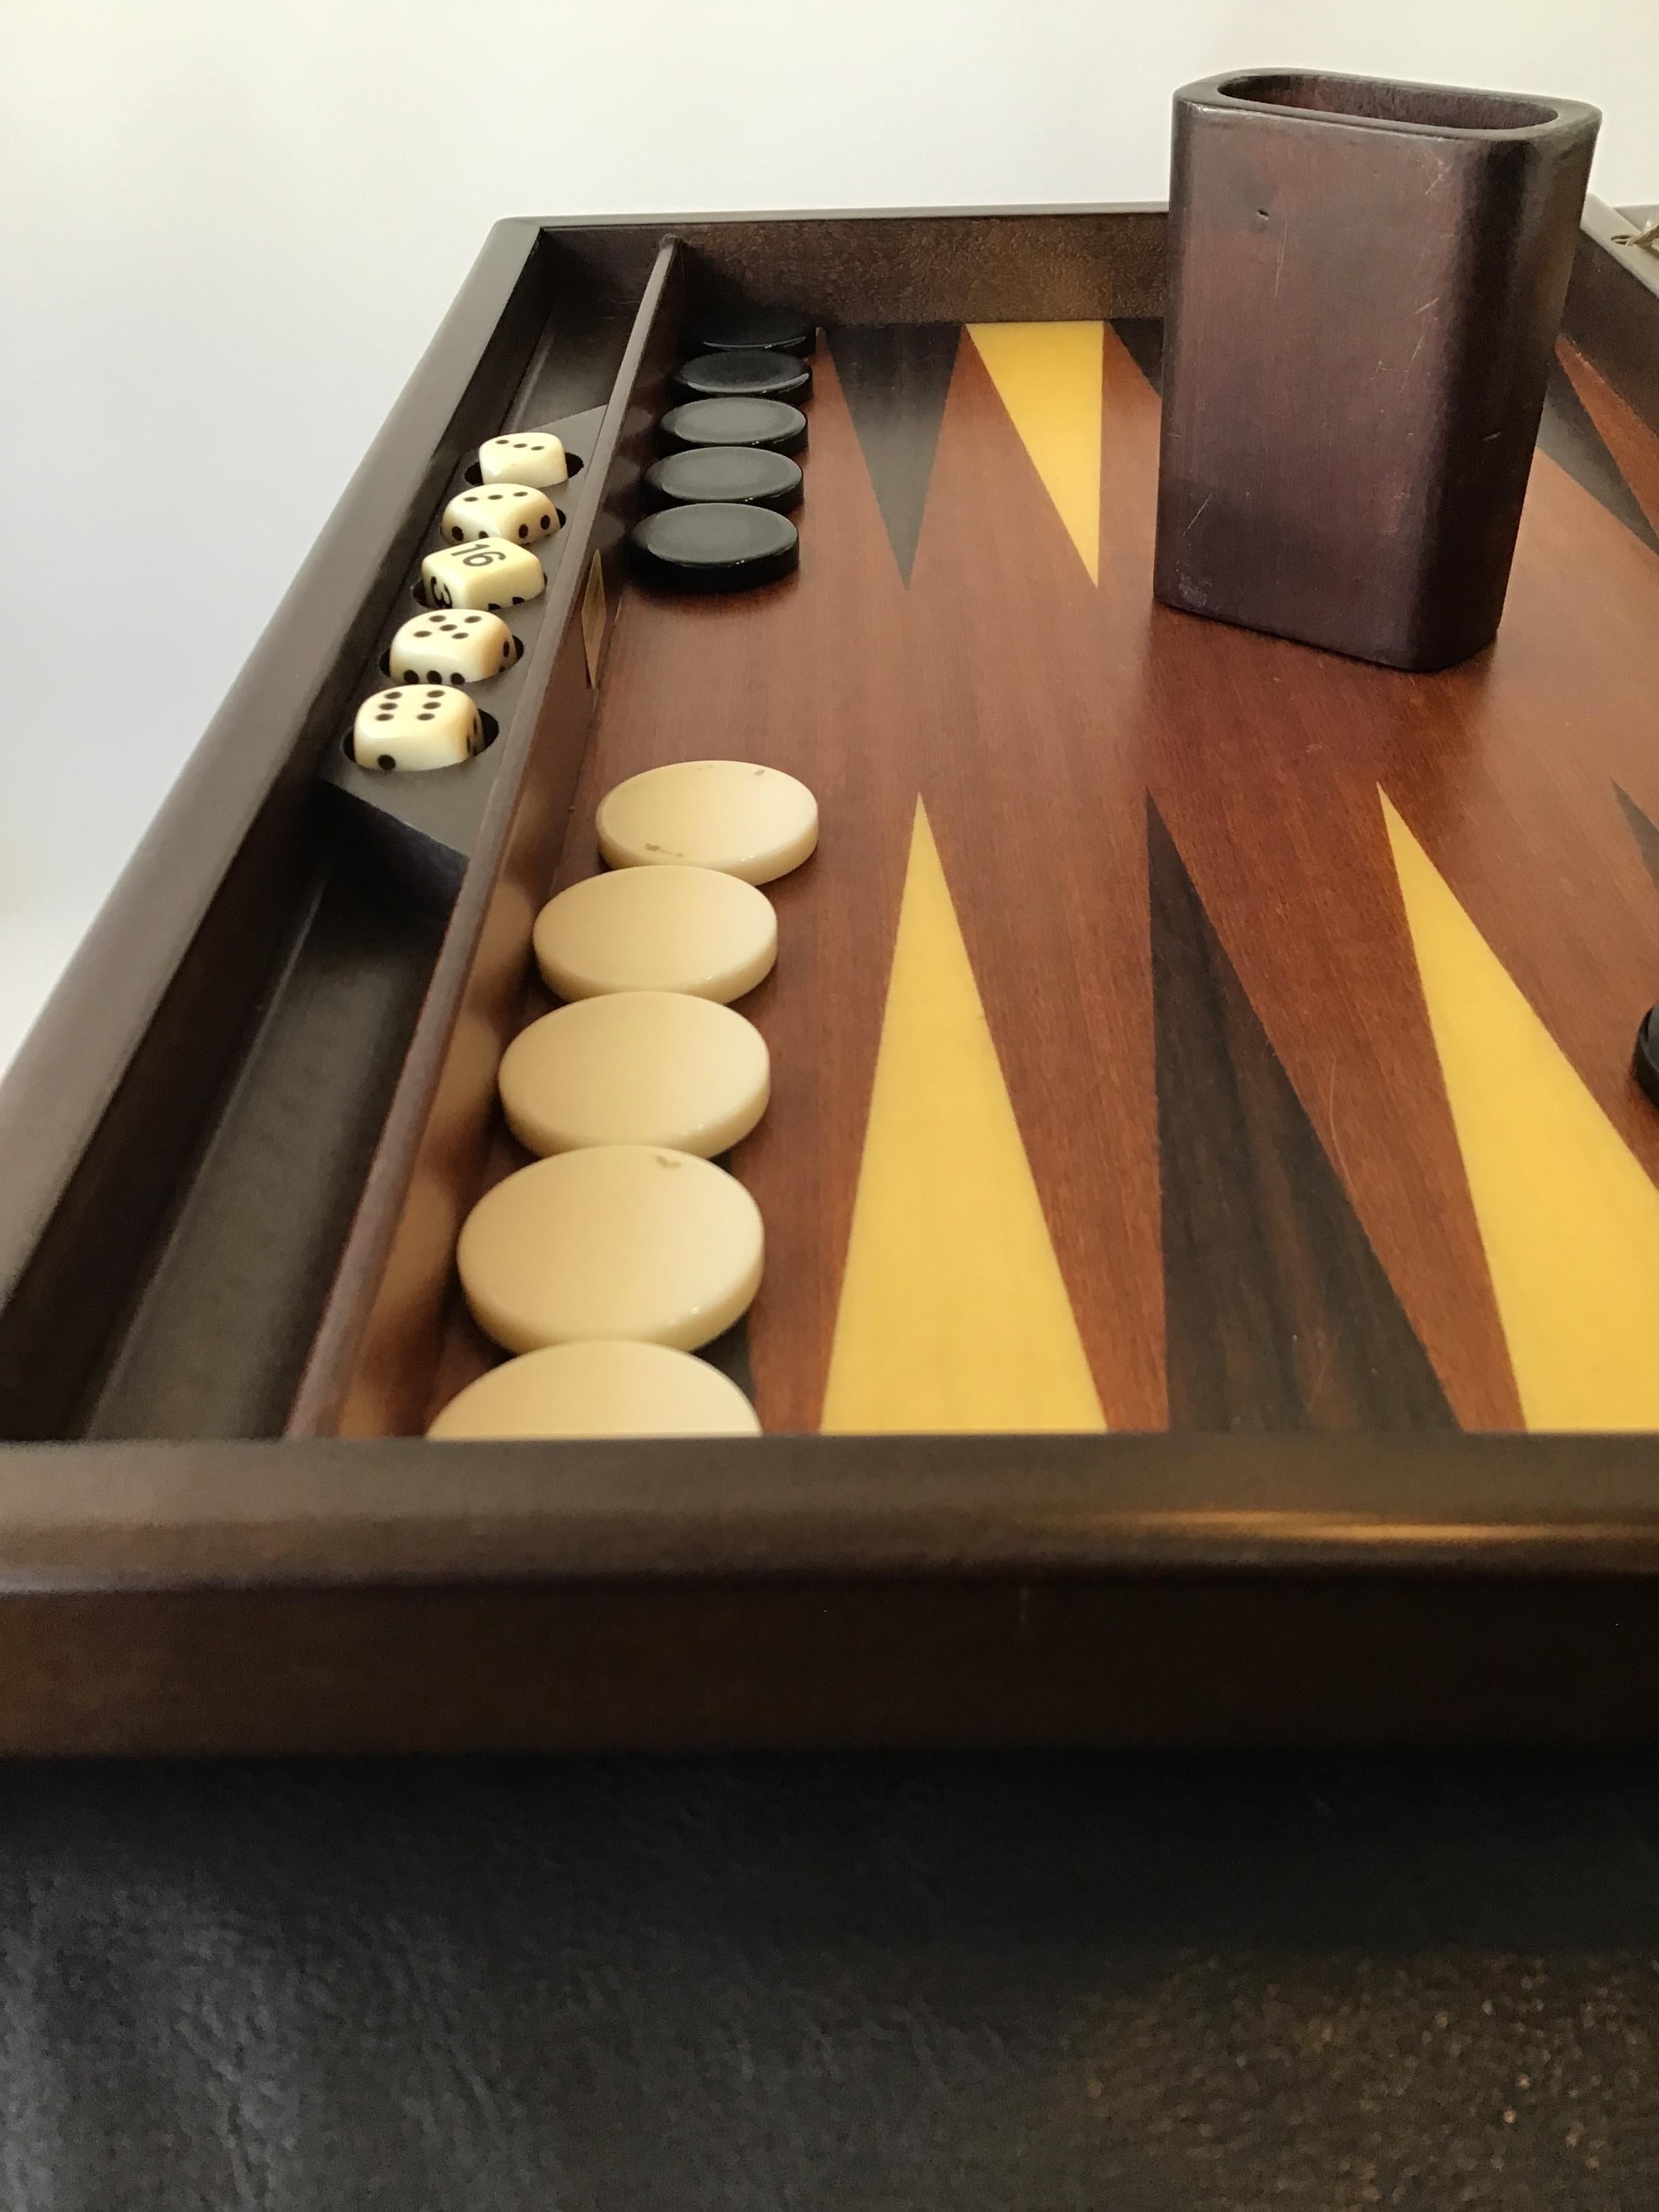 Rosewood backgammon set by Altenburg - Stralsunder, made in Italy.